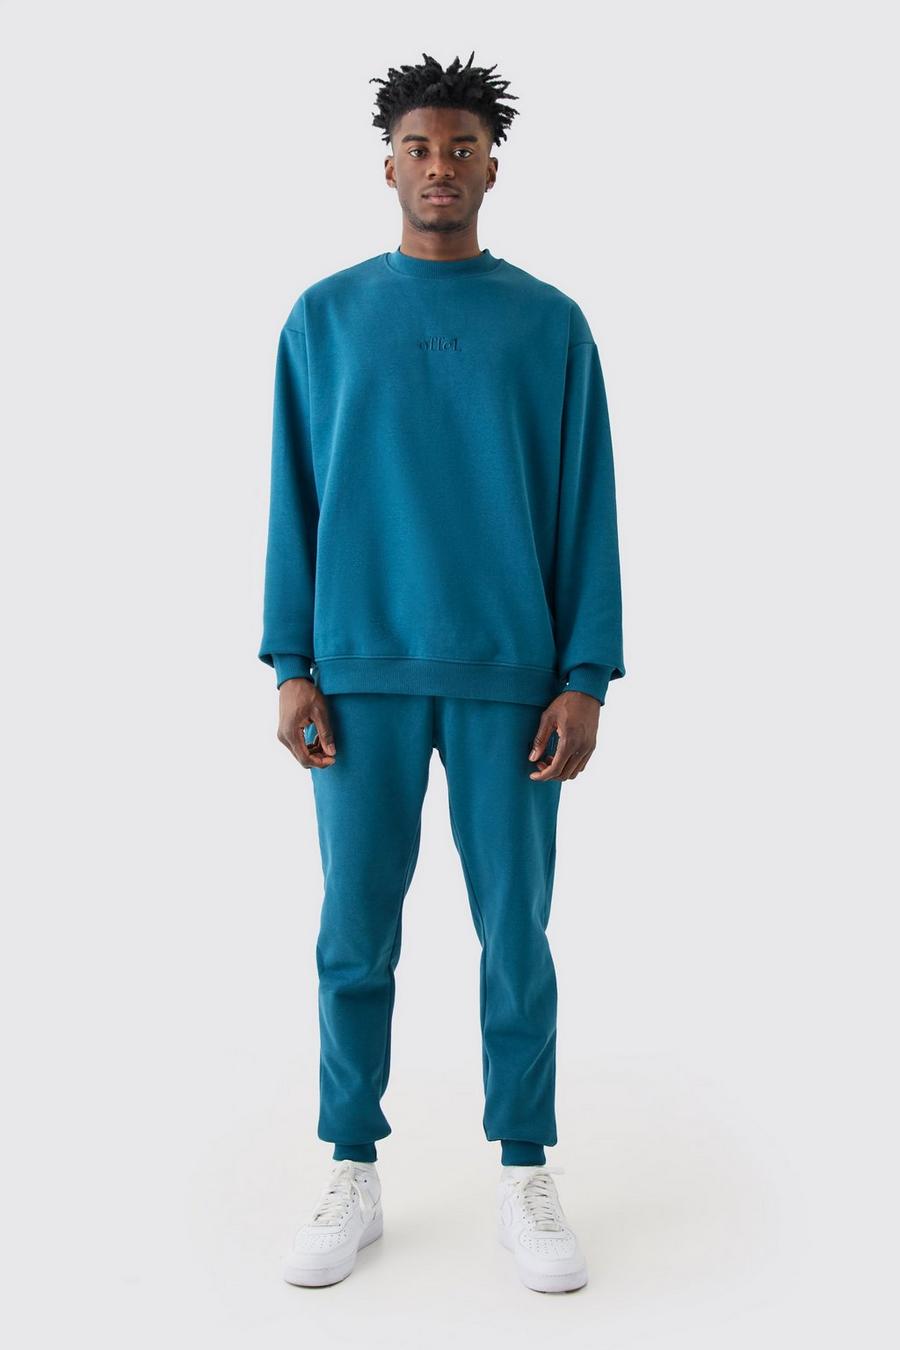 Dark blue Offcl Oversized Extended Neck Sweatshirt Tracksuit